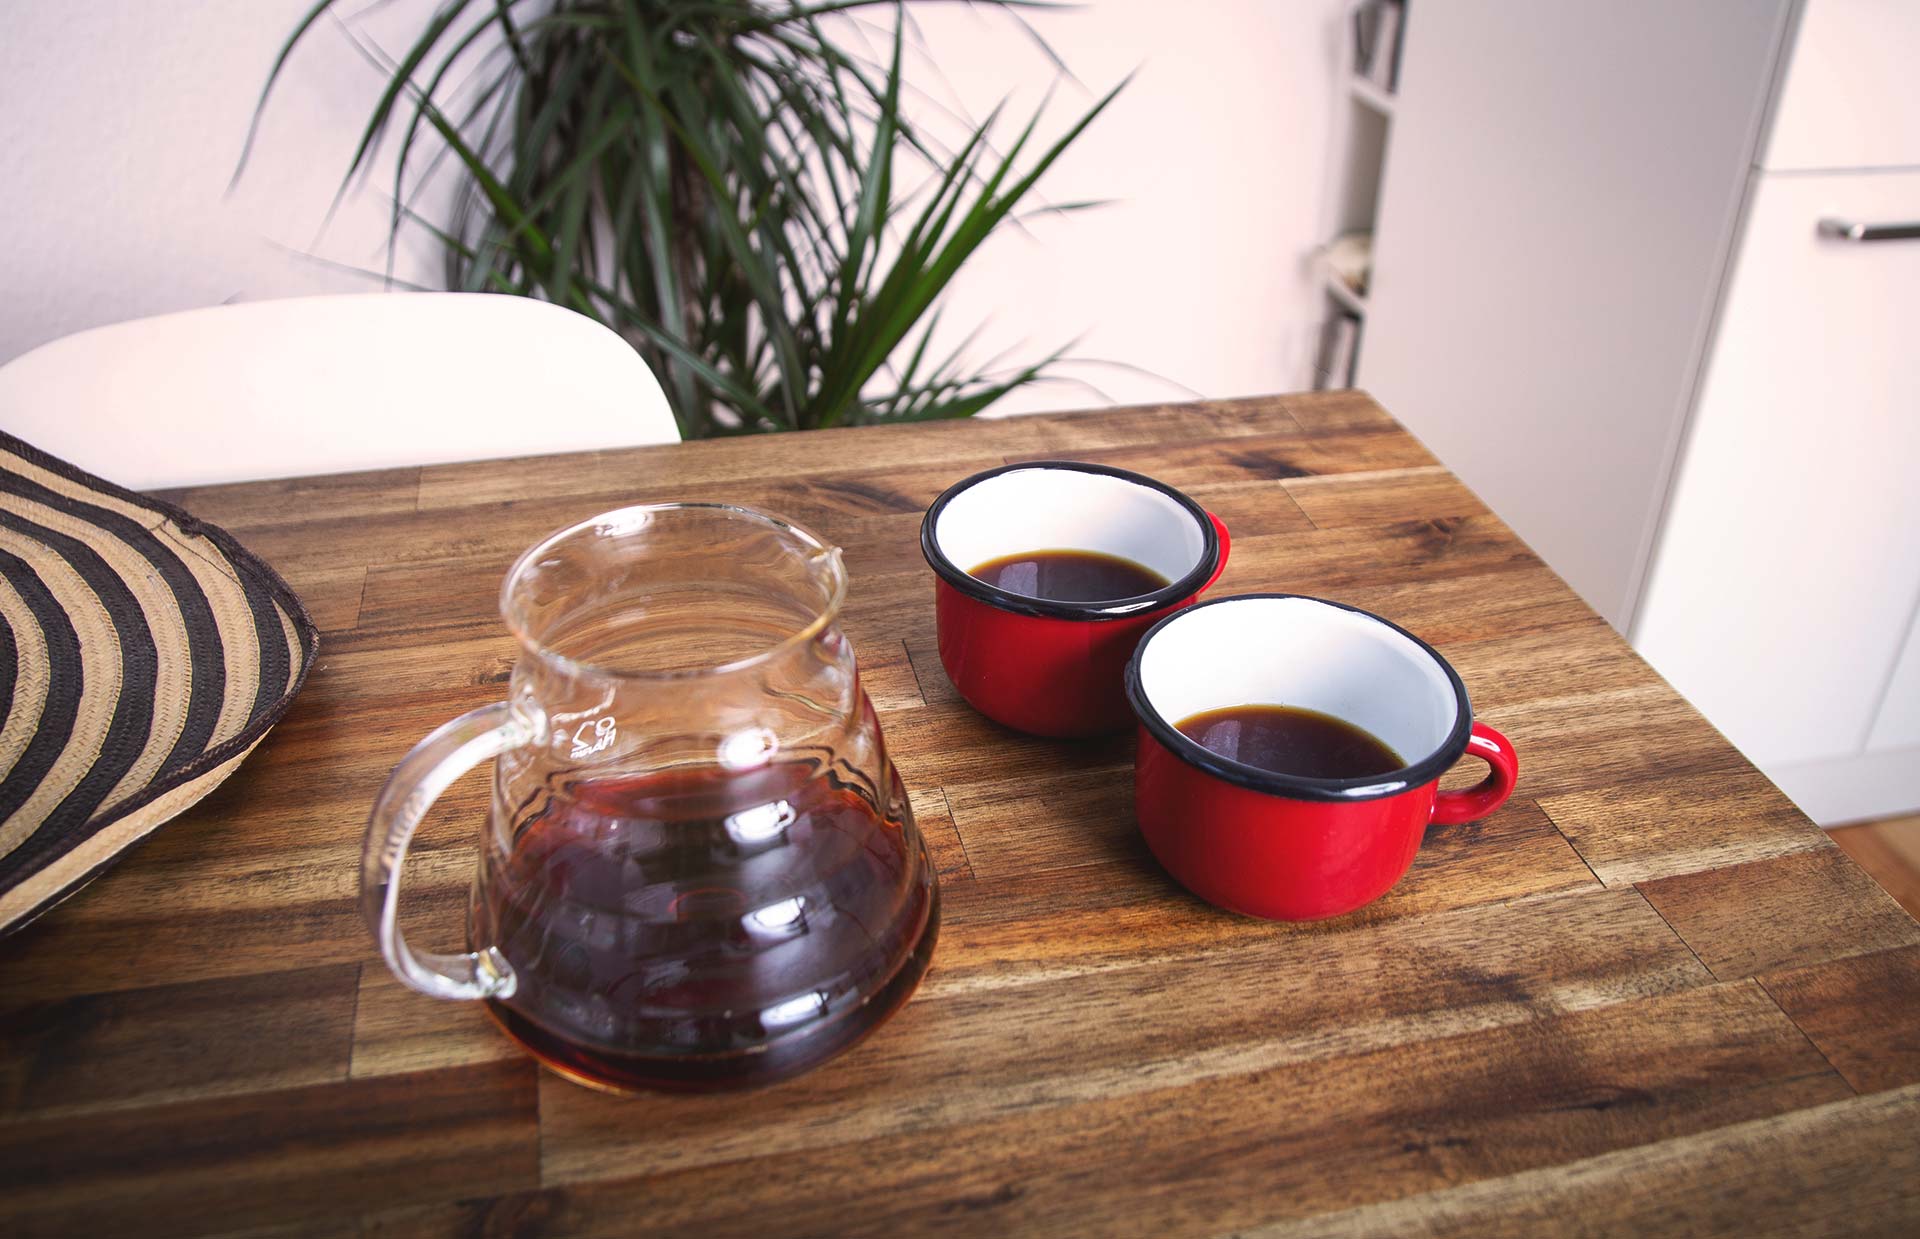 Guide: Kaffeezubereitung mit dem Hario V60 Handfilter. CafCaf.de – Kaffee & Blog, Kaffeeblog